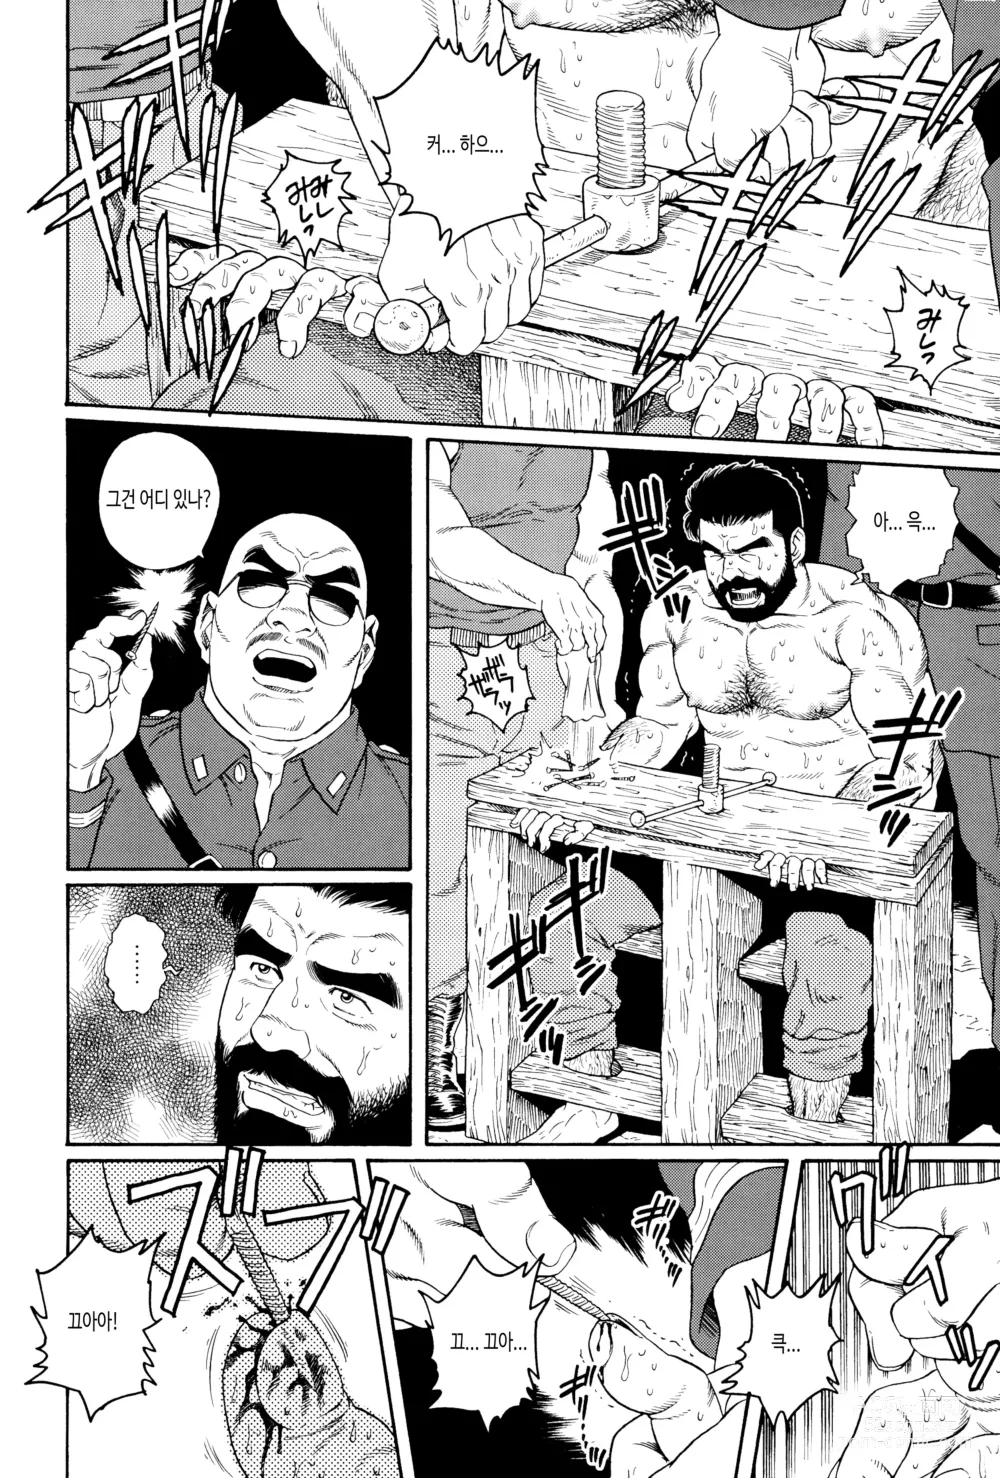 Page 6 of manga NIGHTMARE